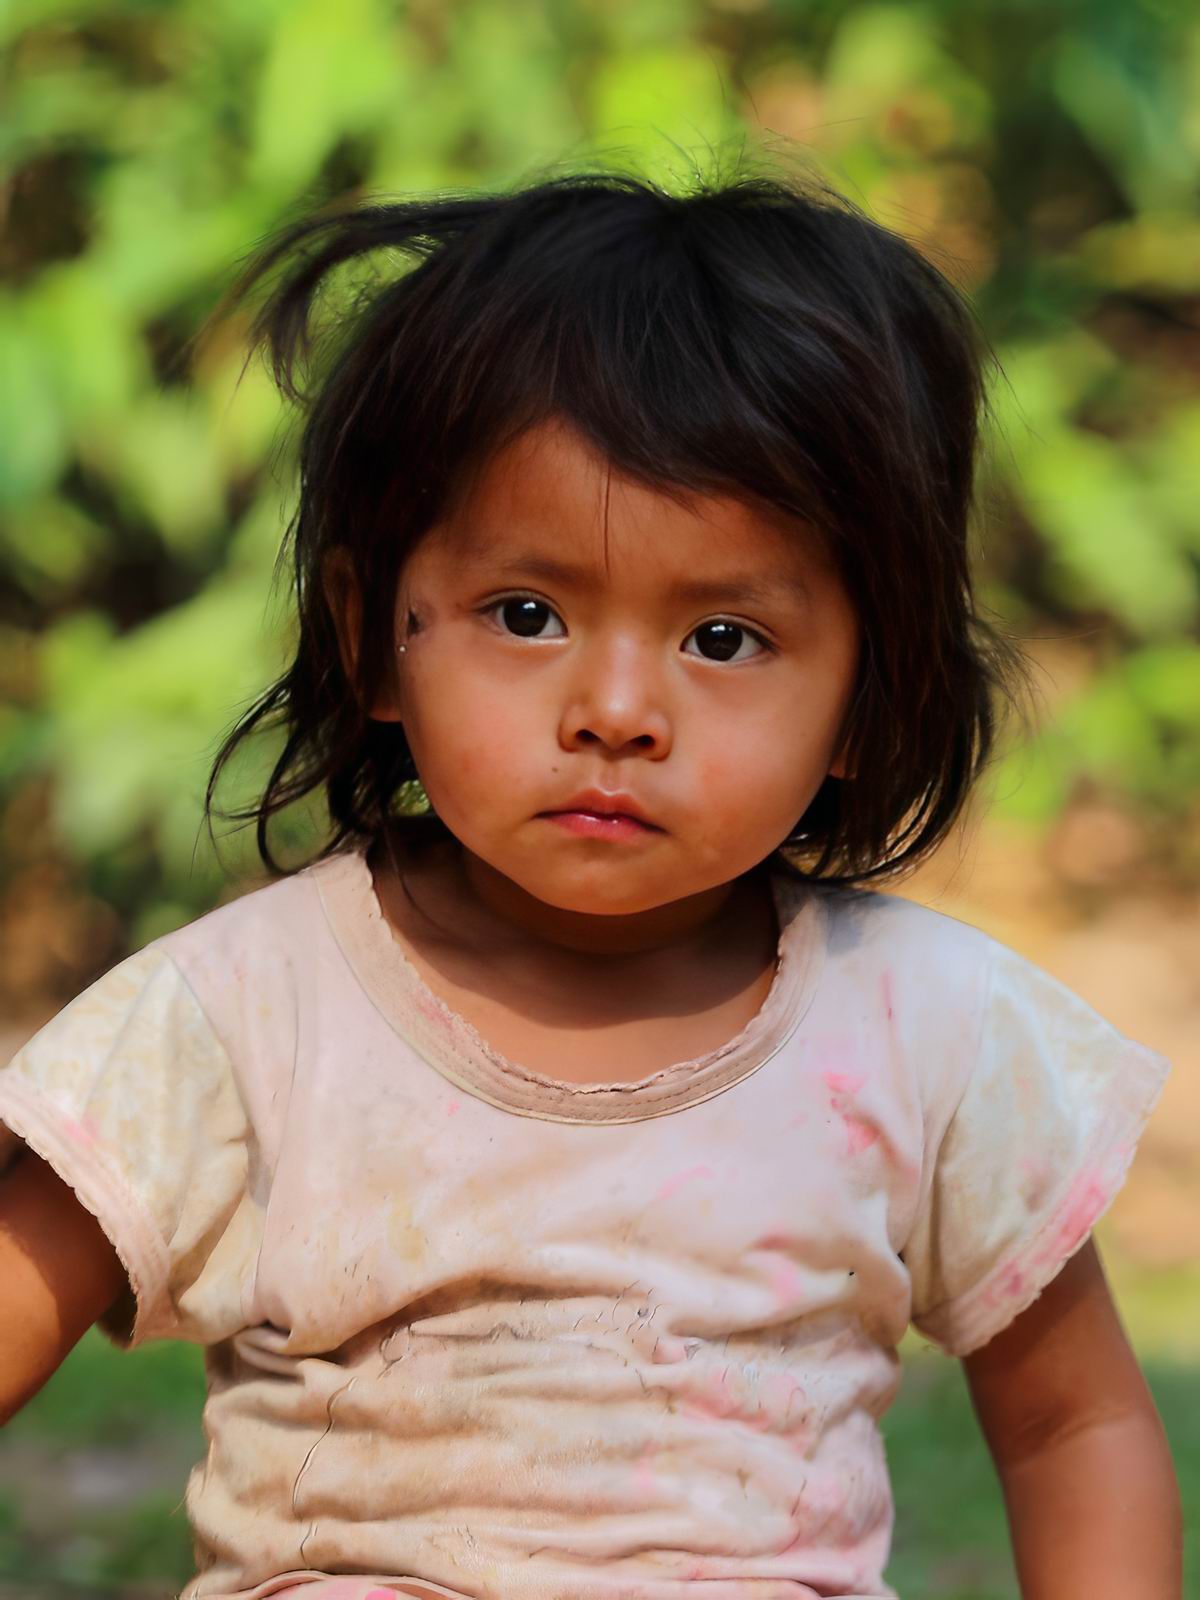 020_亚马逊密林中的童年 Childhood in the Amazon Rainforest.jpg